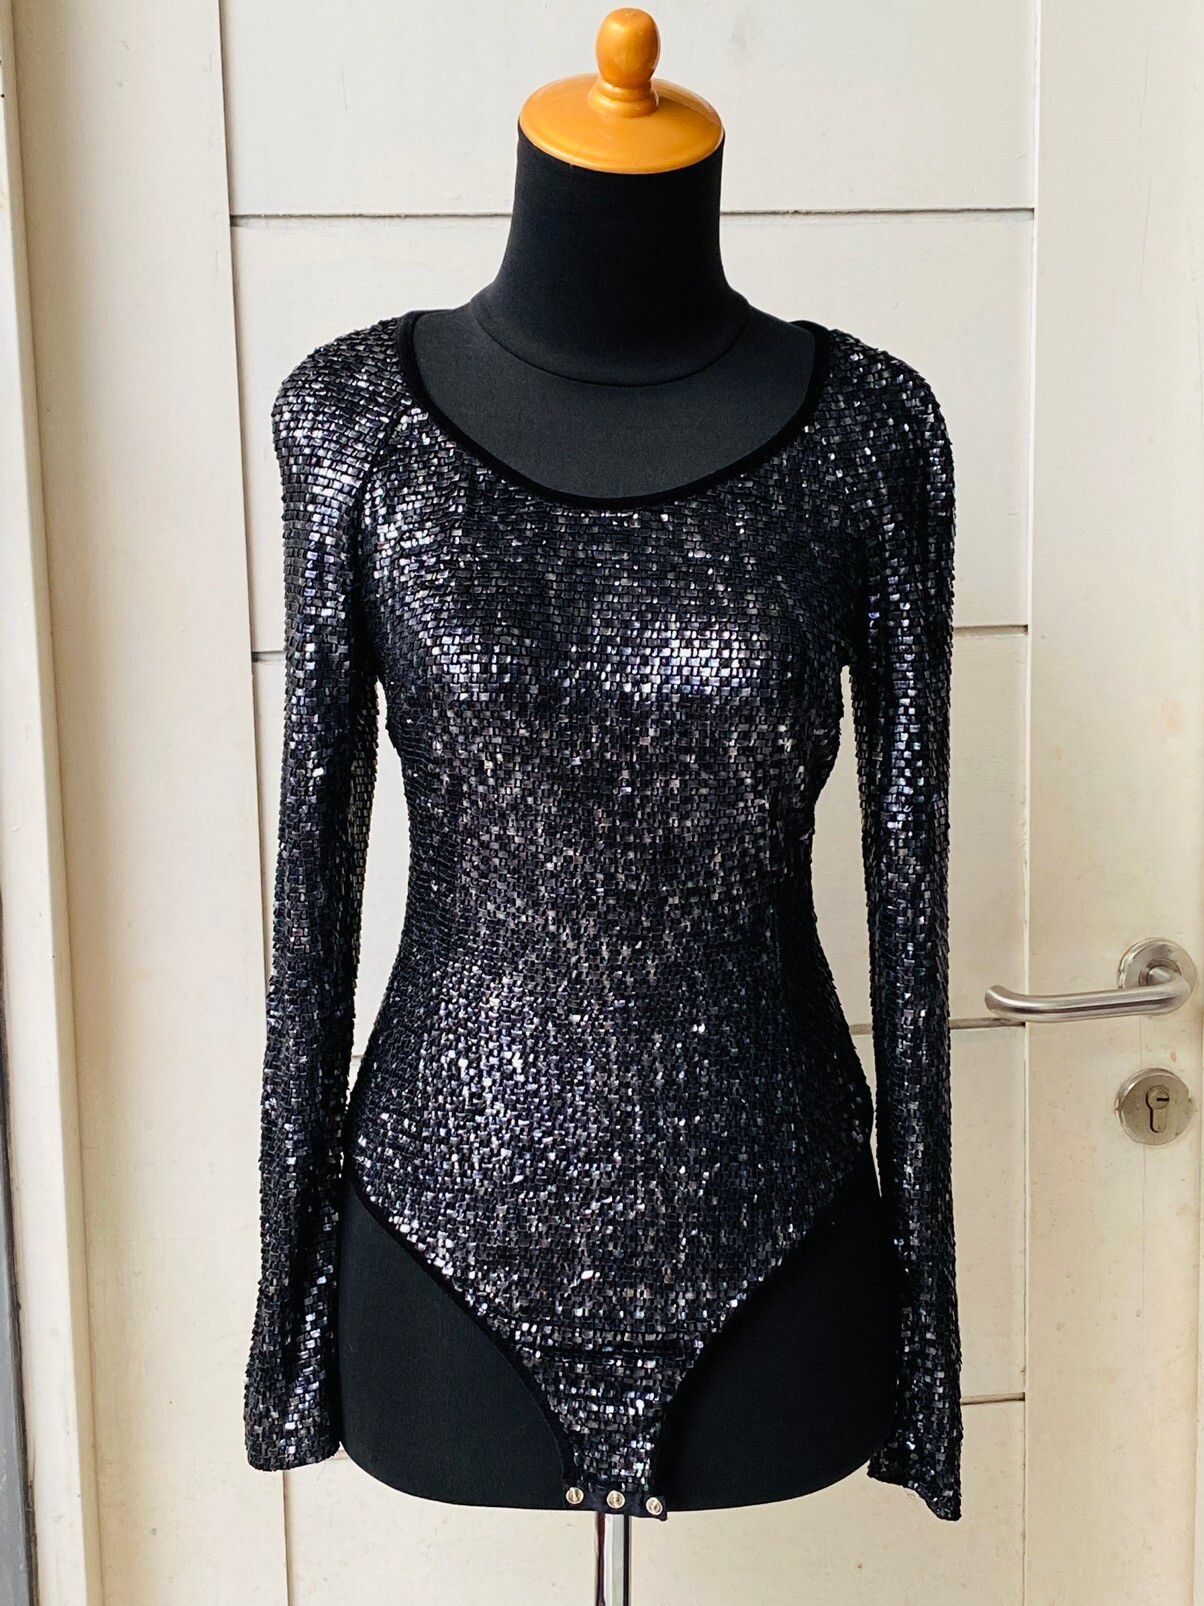 Ritmo Di Perla Ritmo di Perla Black Glitch Bodysuit Size S / US 4 / IT 40 - 1 Preview